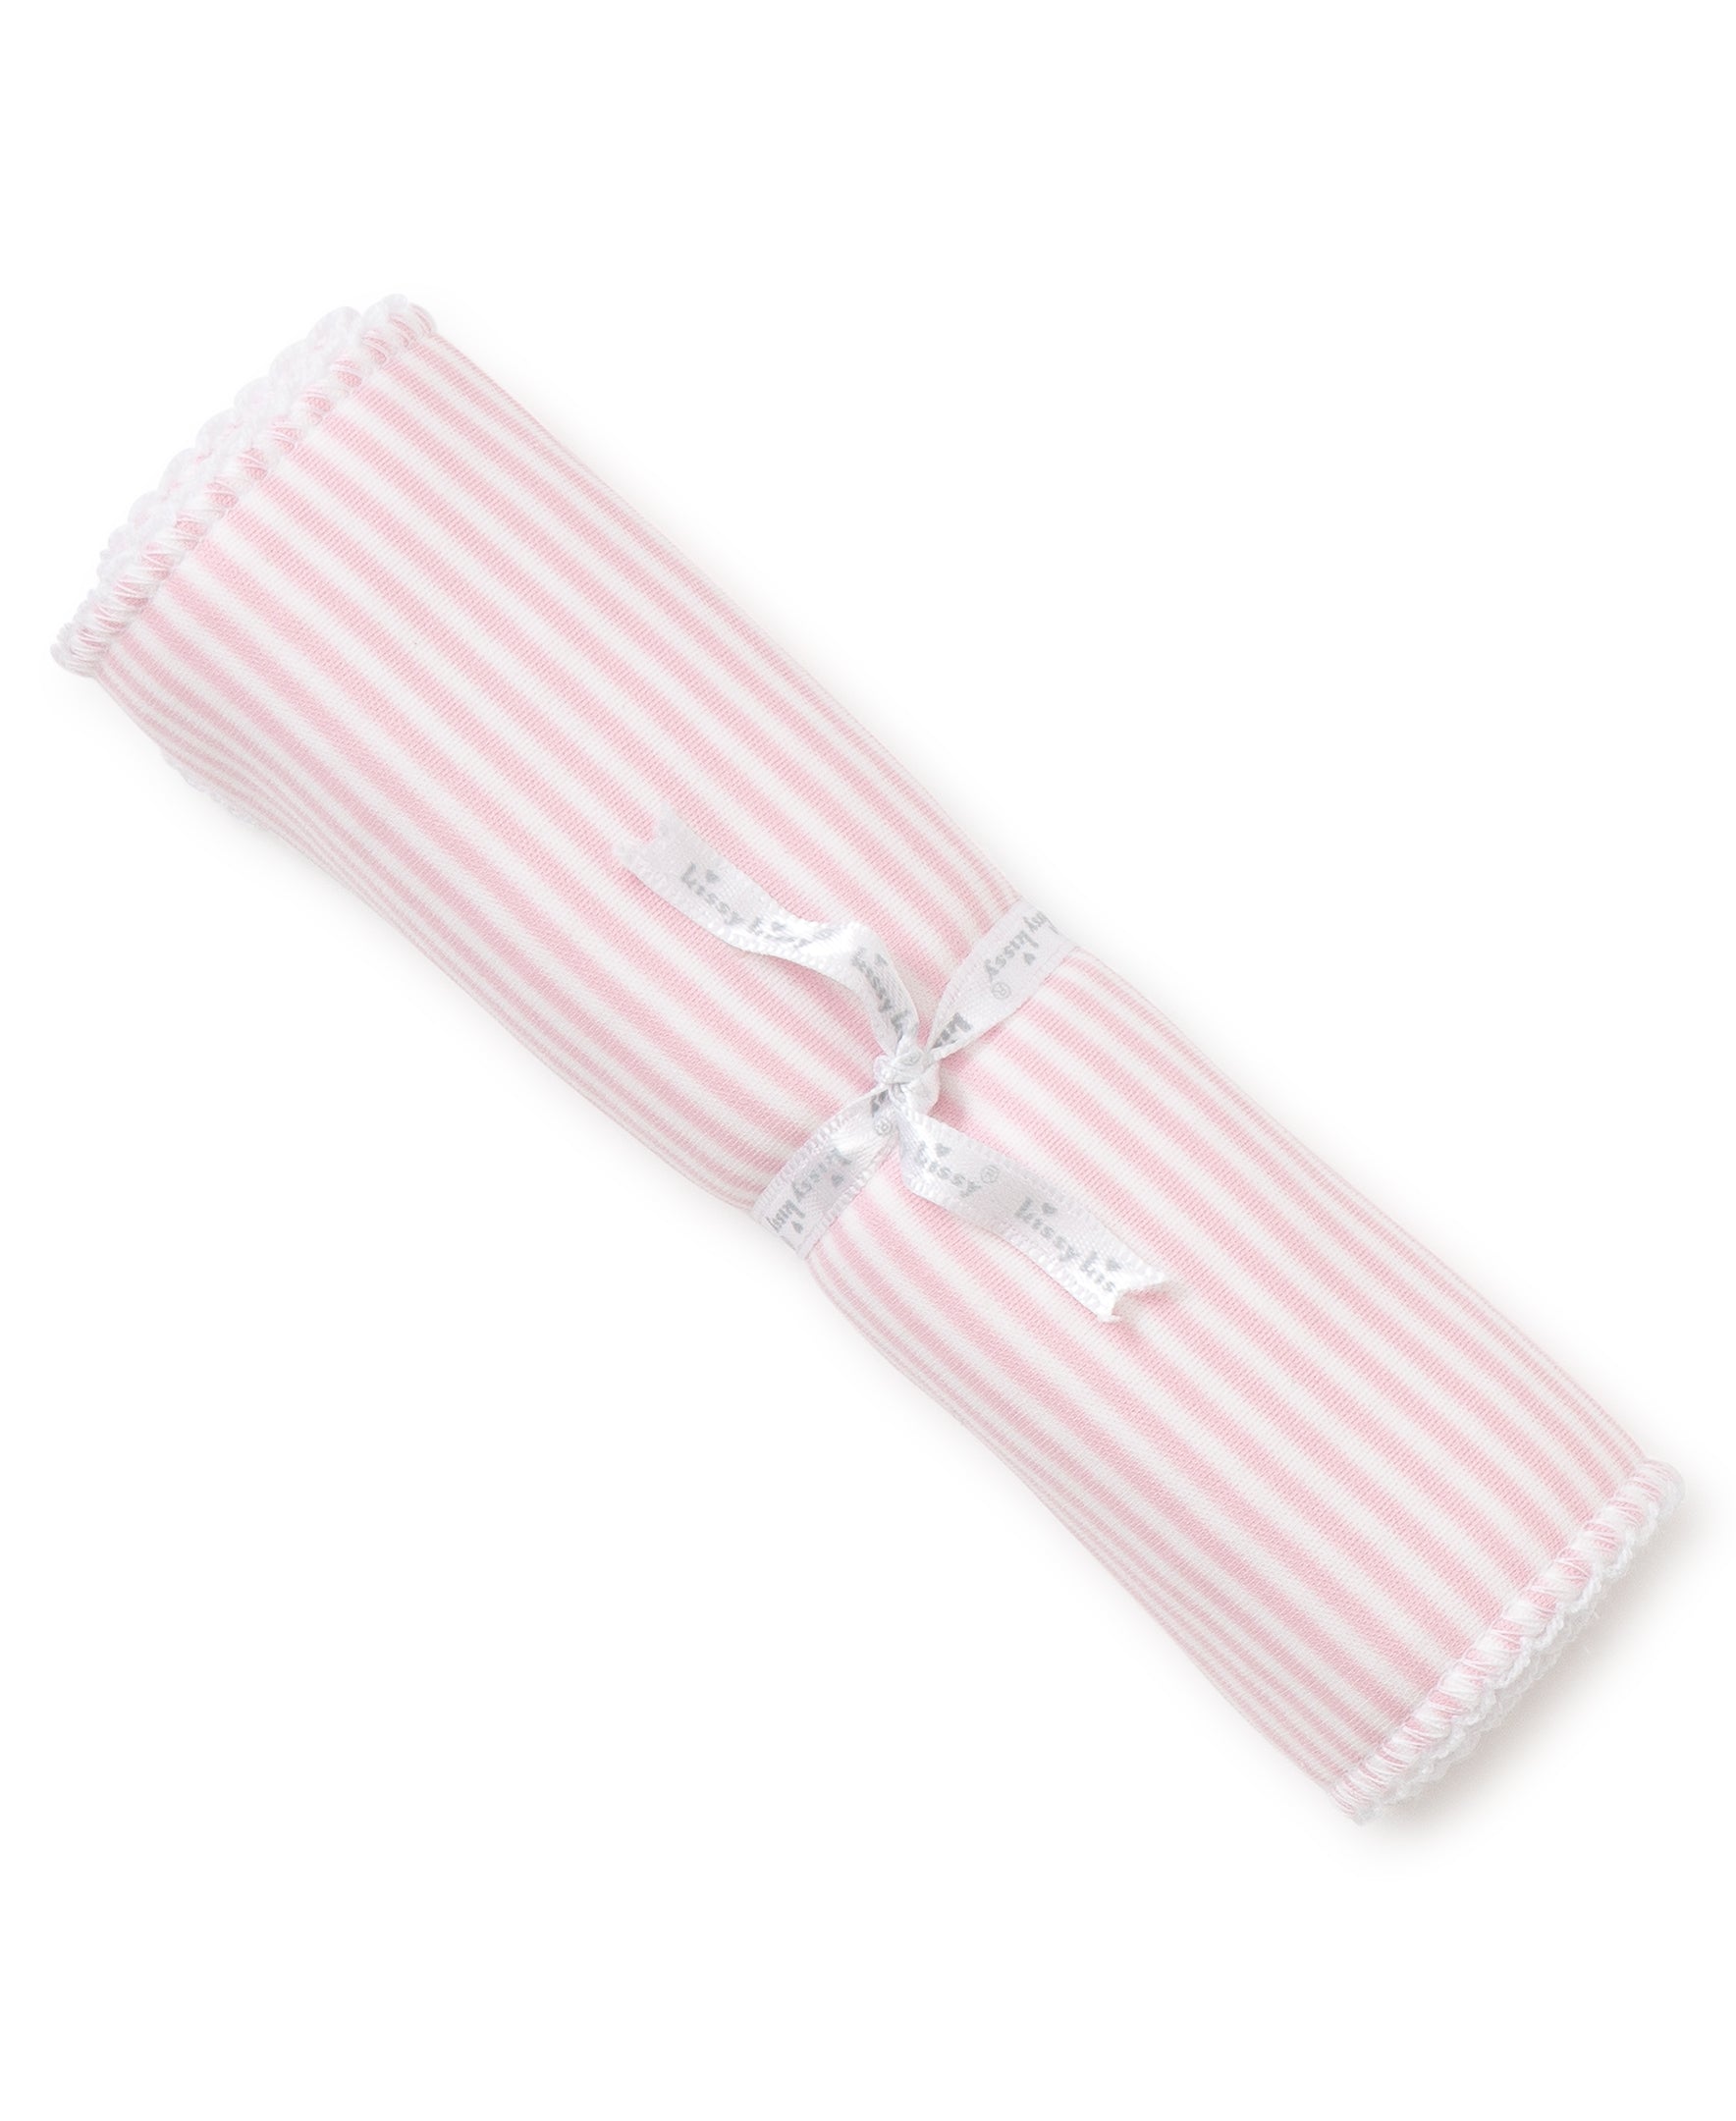 Simple Stripes Pink Burp Cloth - Kissy Kissy